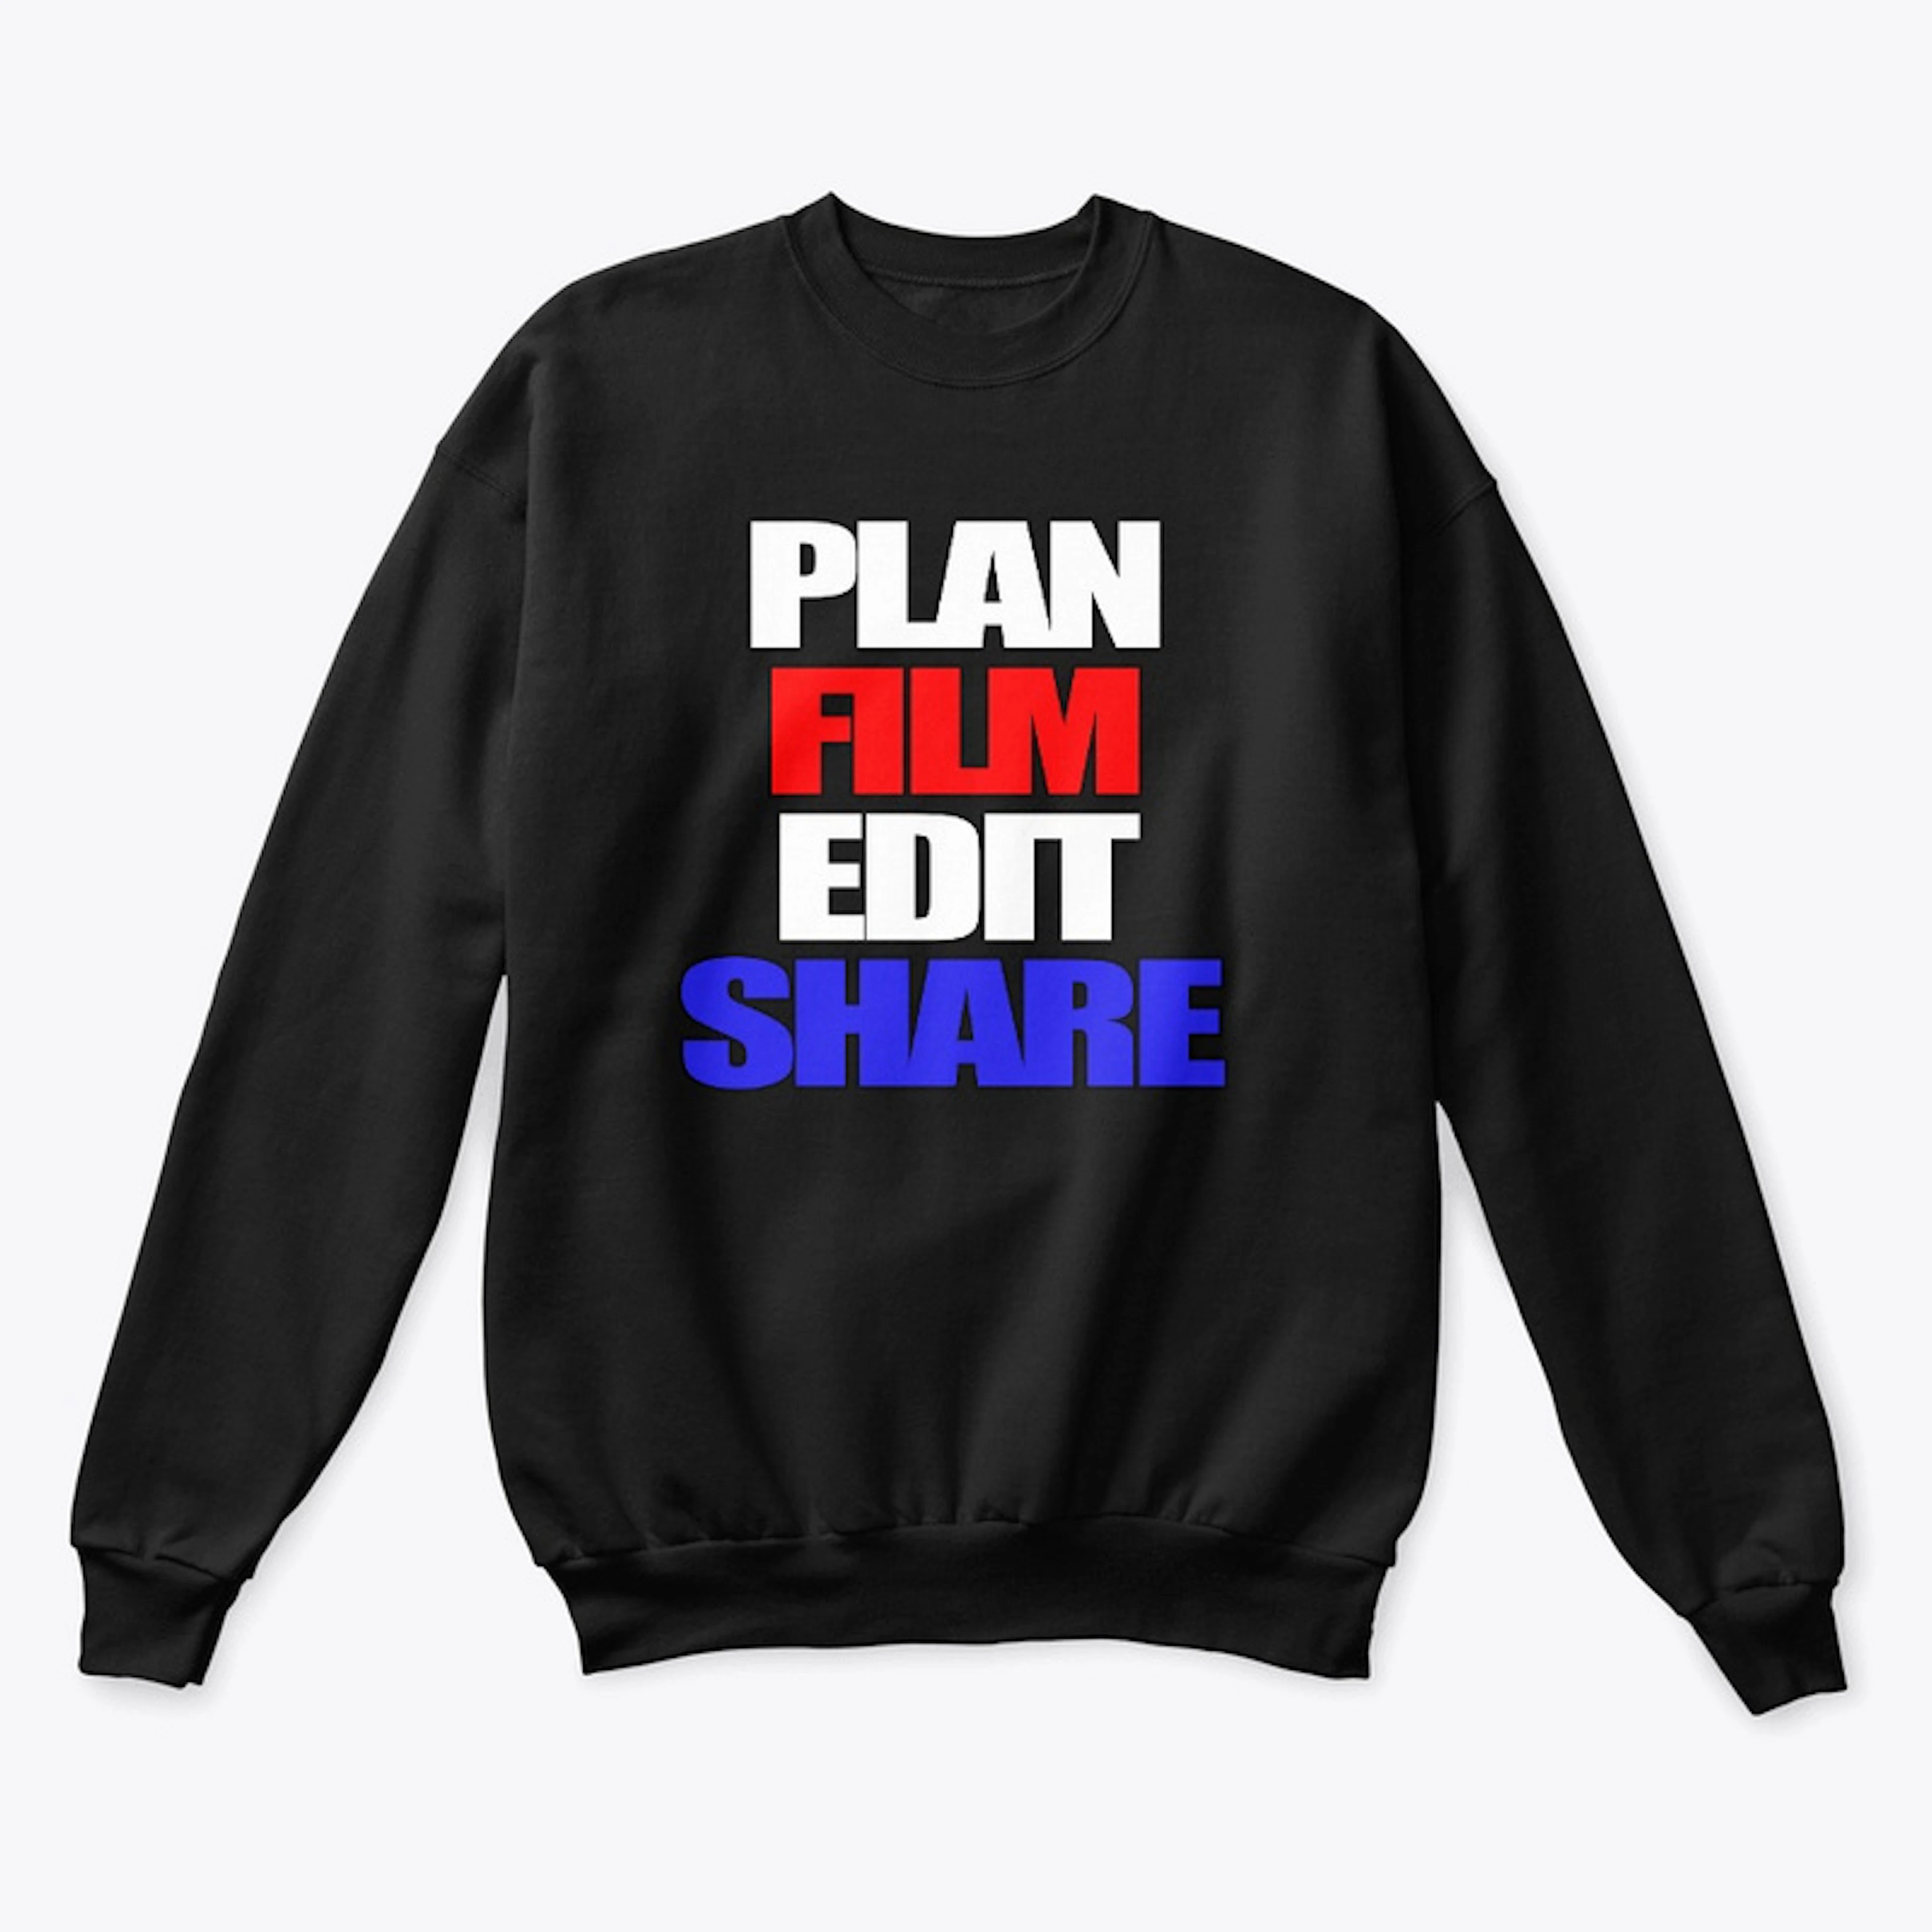  Plan Film Edit Share